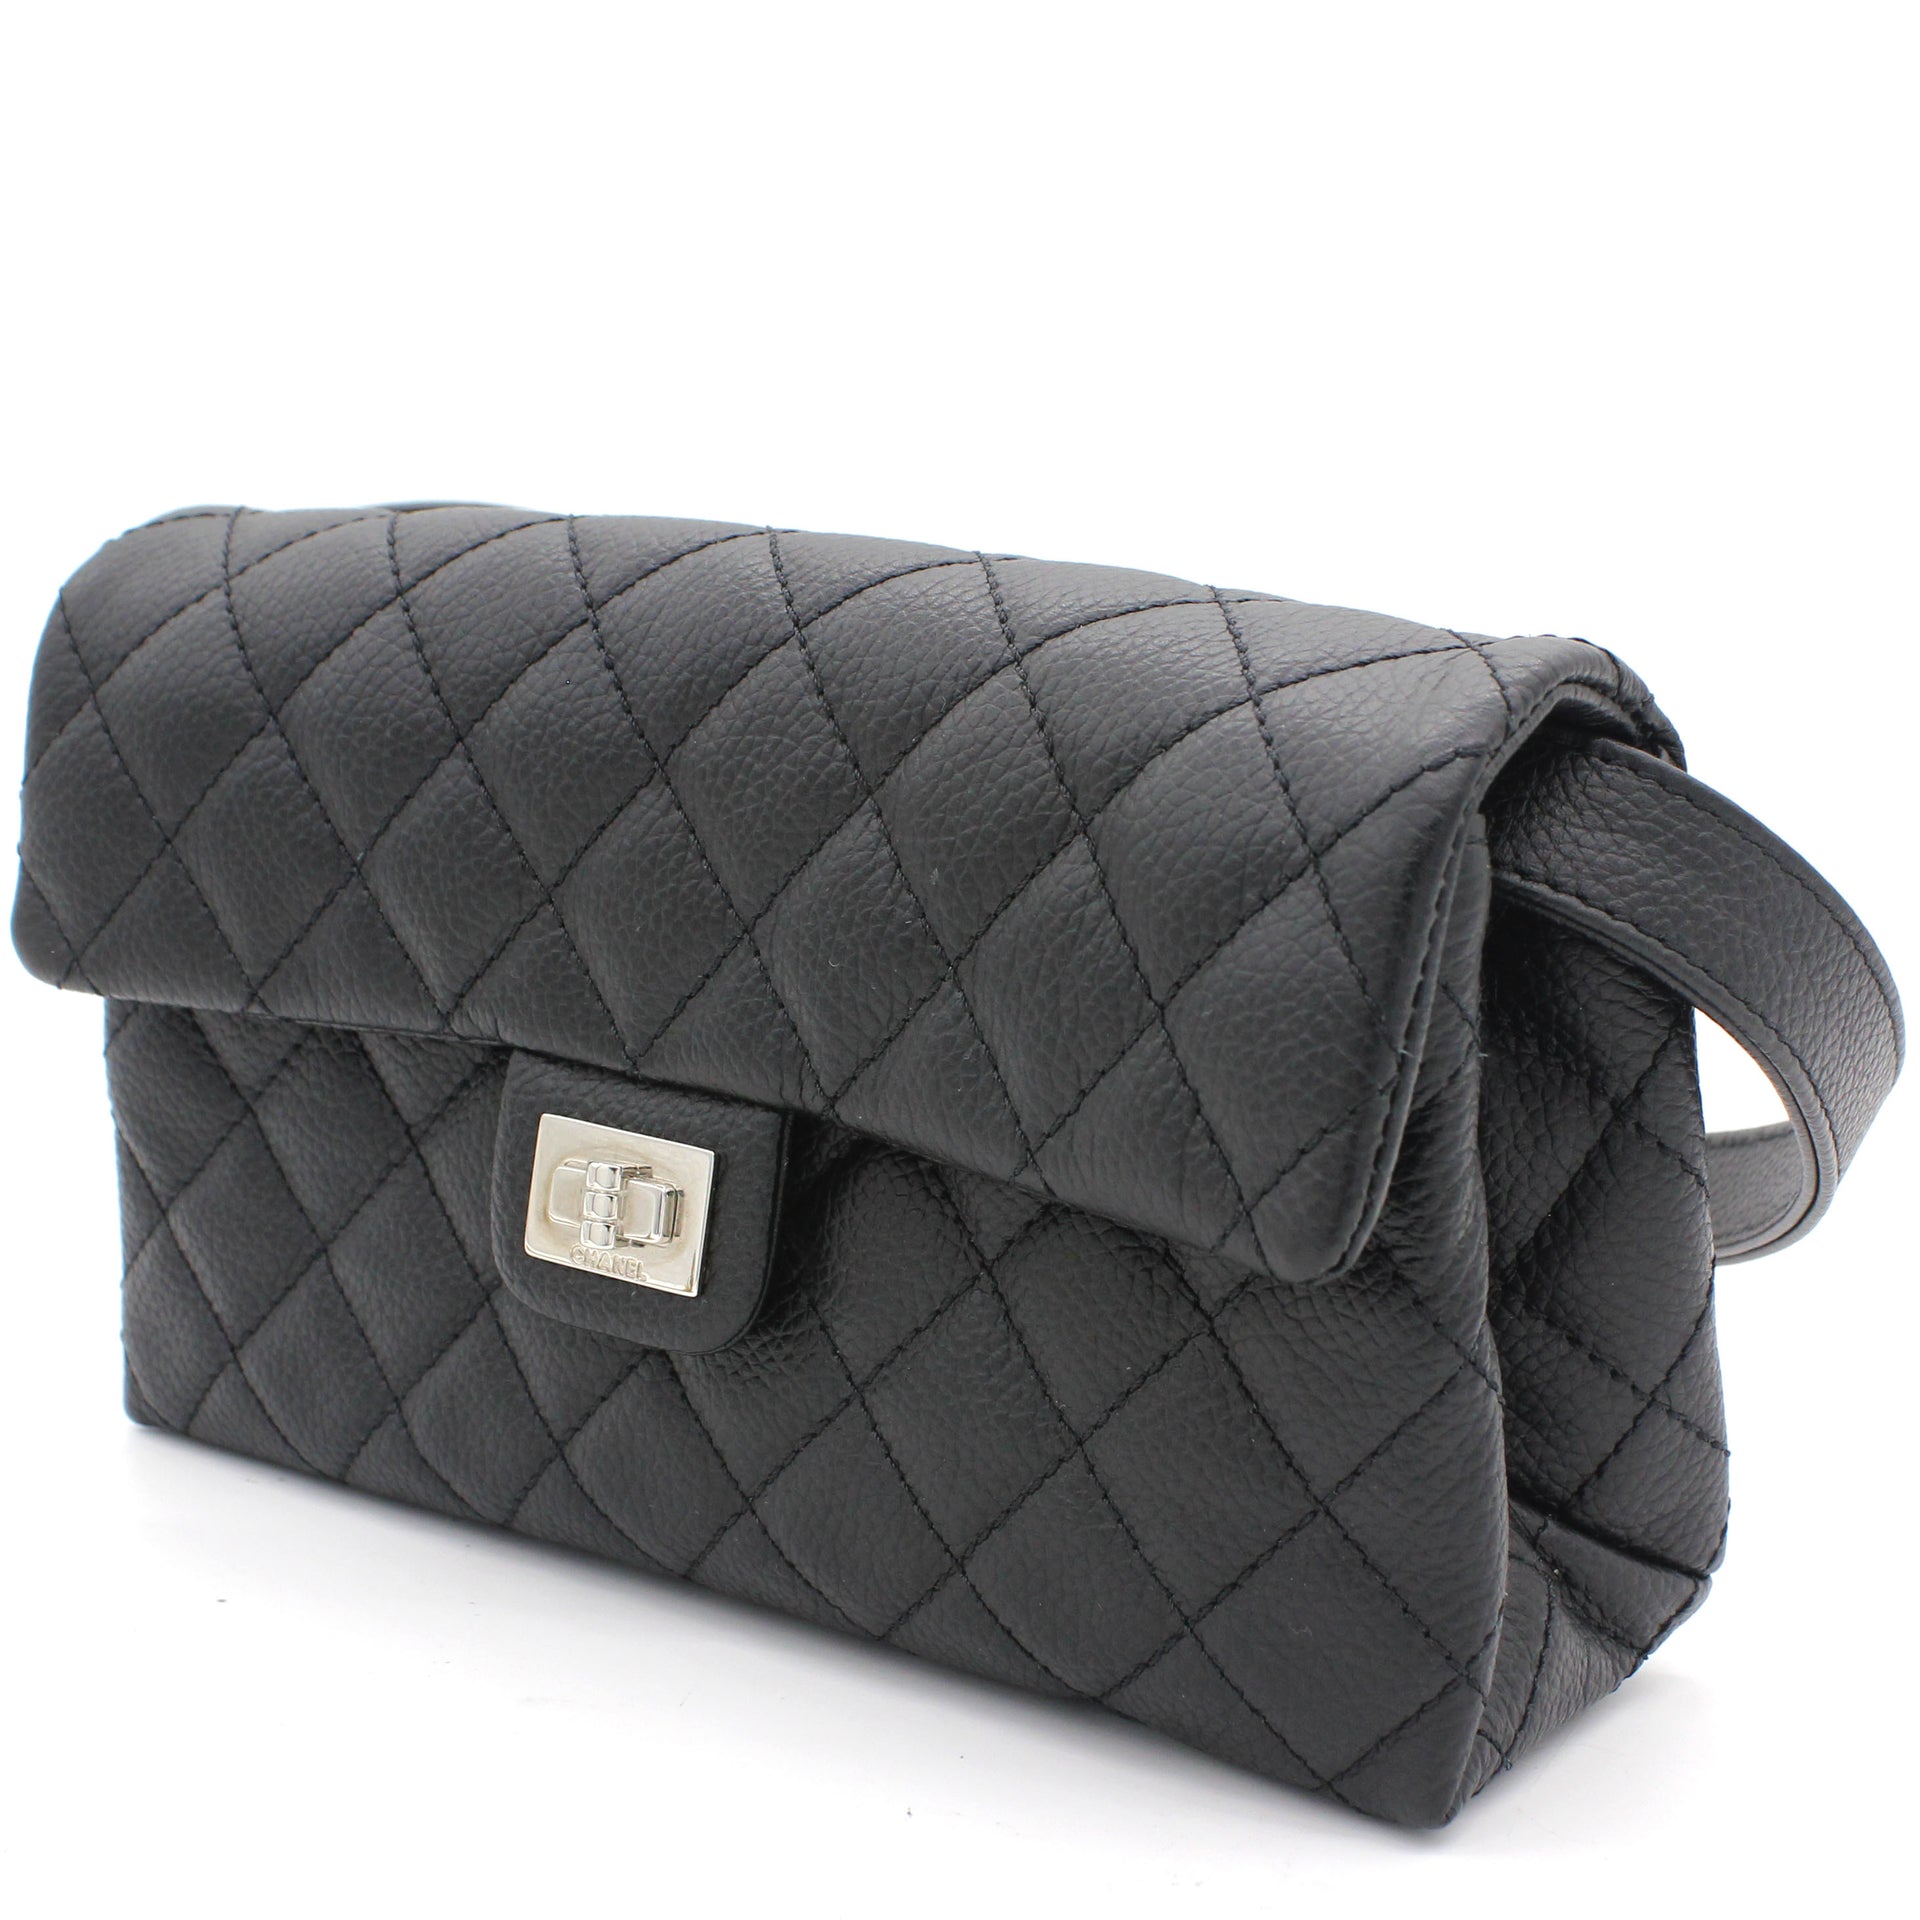 Authentic NEW Chanel Uniform Waist Bag Fanny Pack Black Free Shipping  eBay